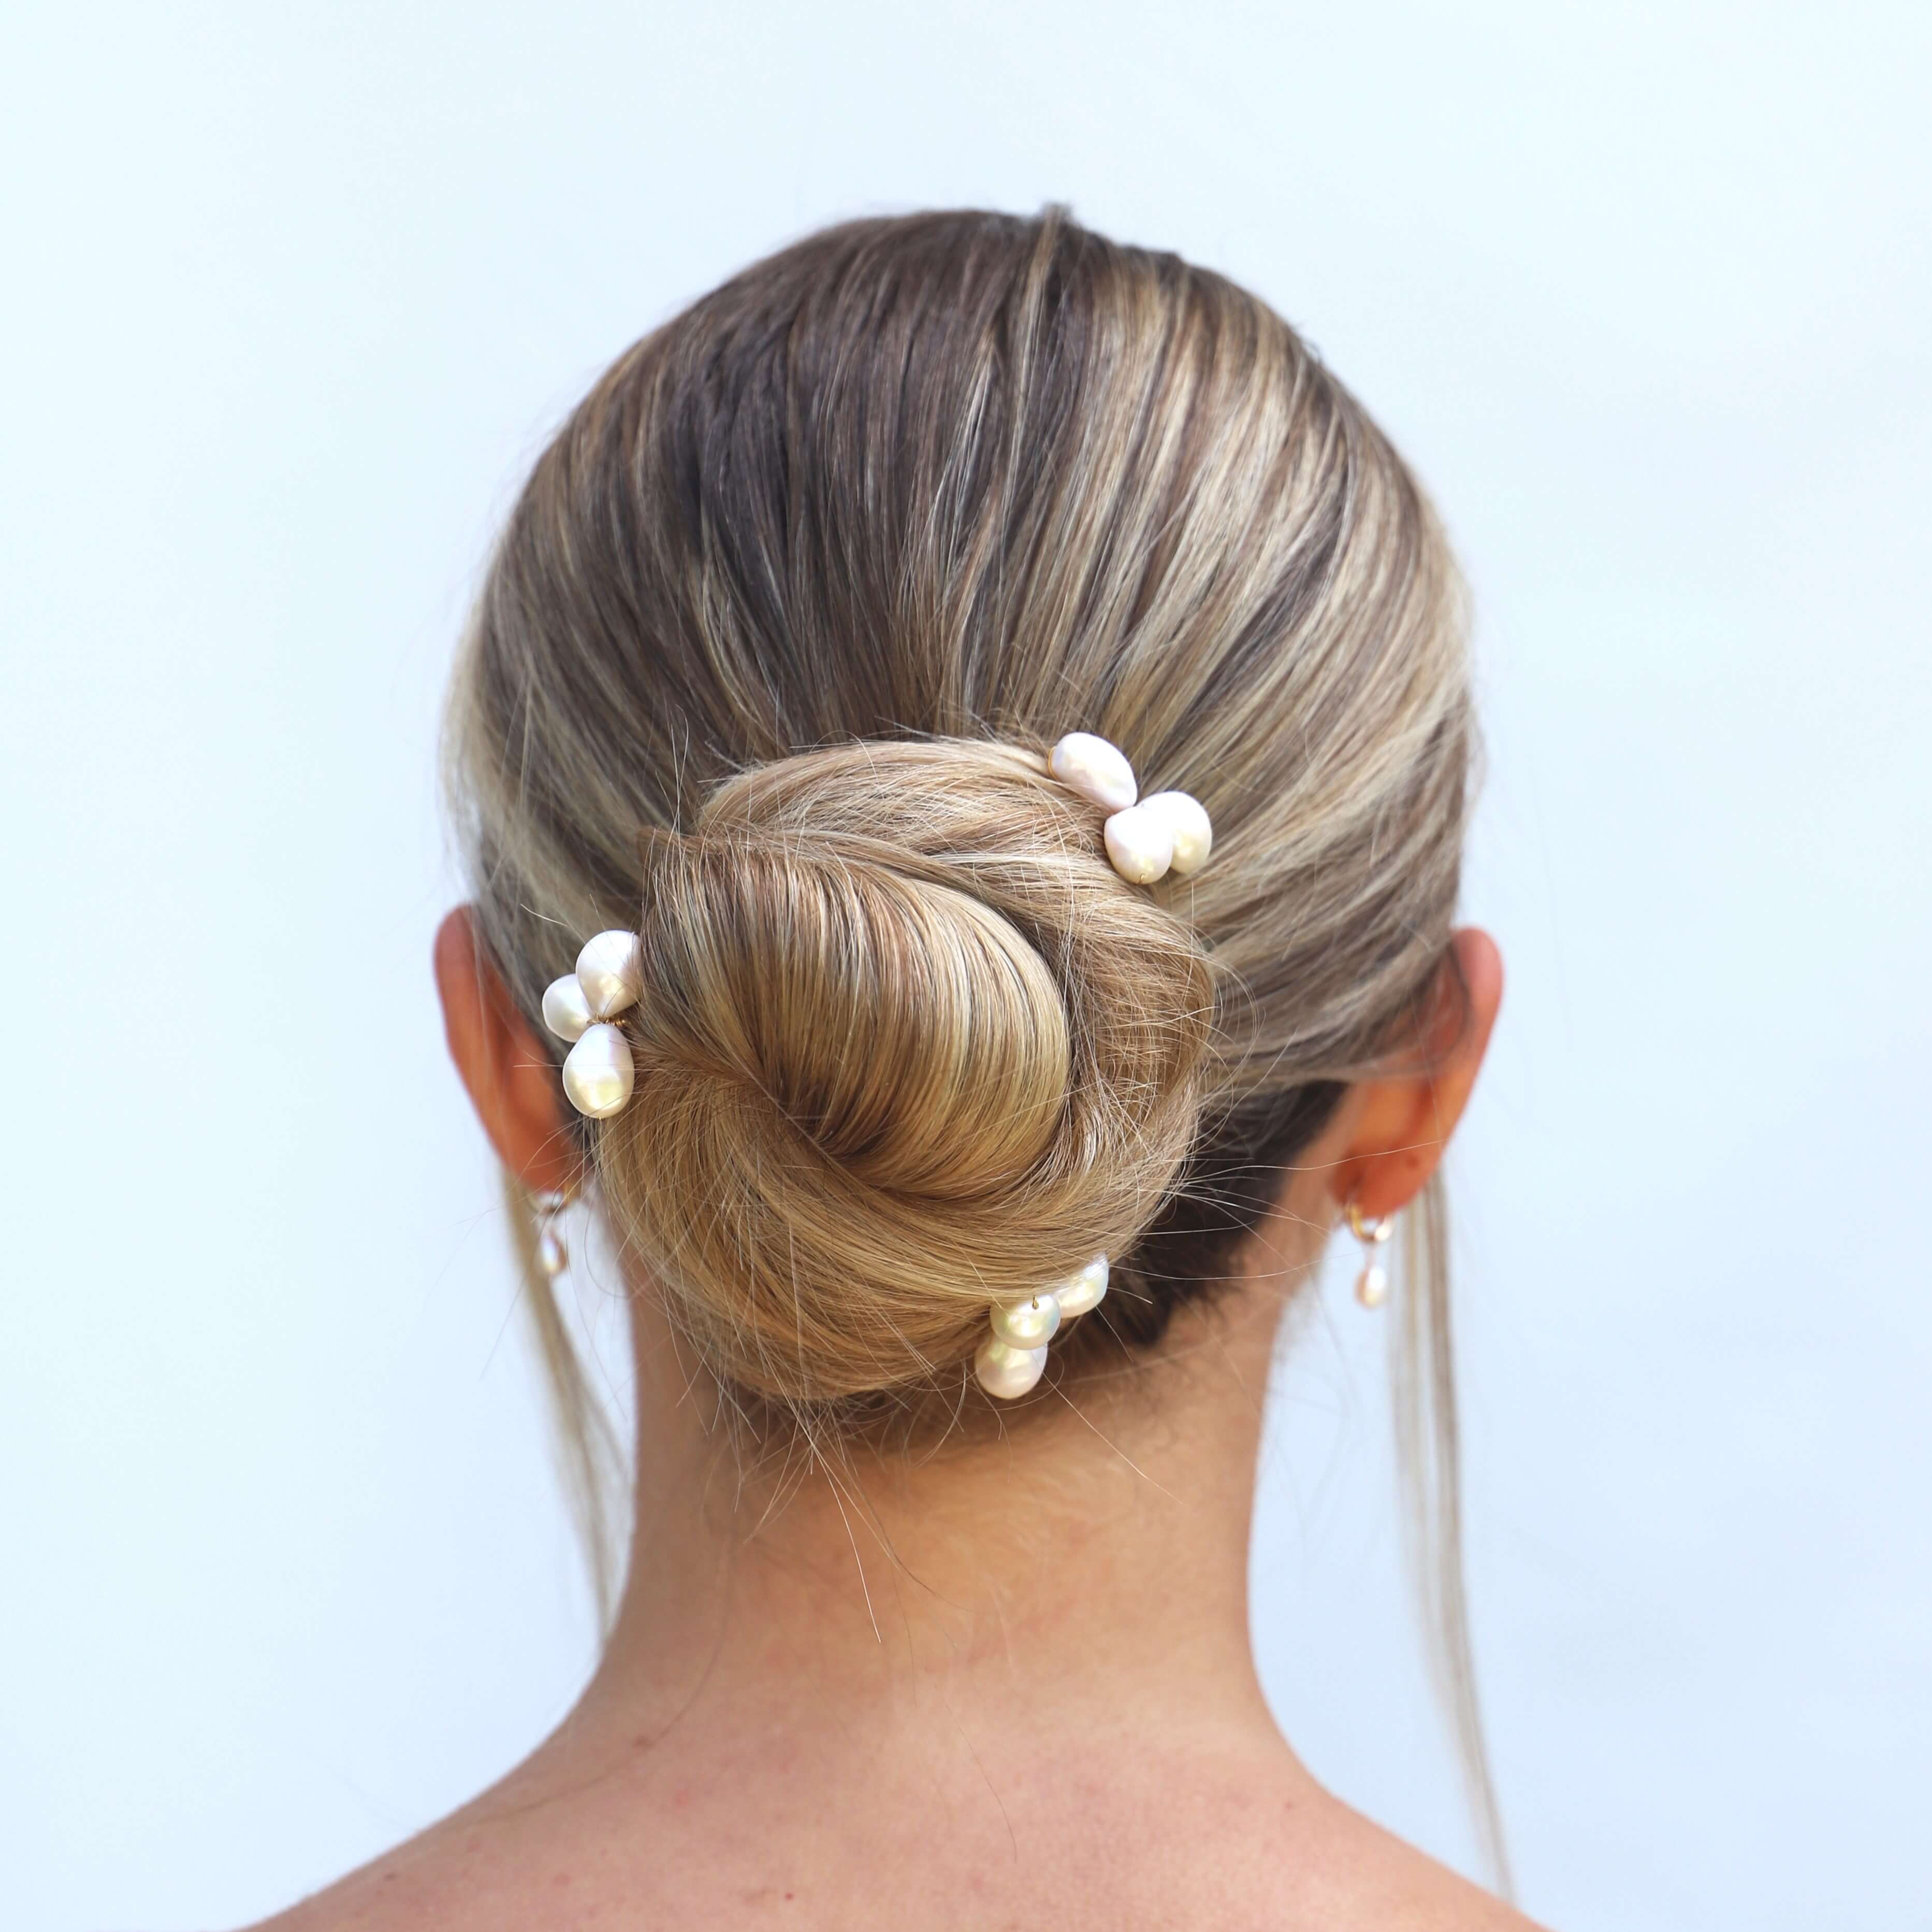 large pearl cluster hair pins in hair on bride